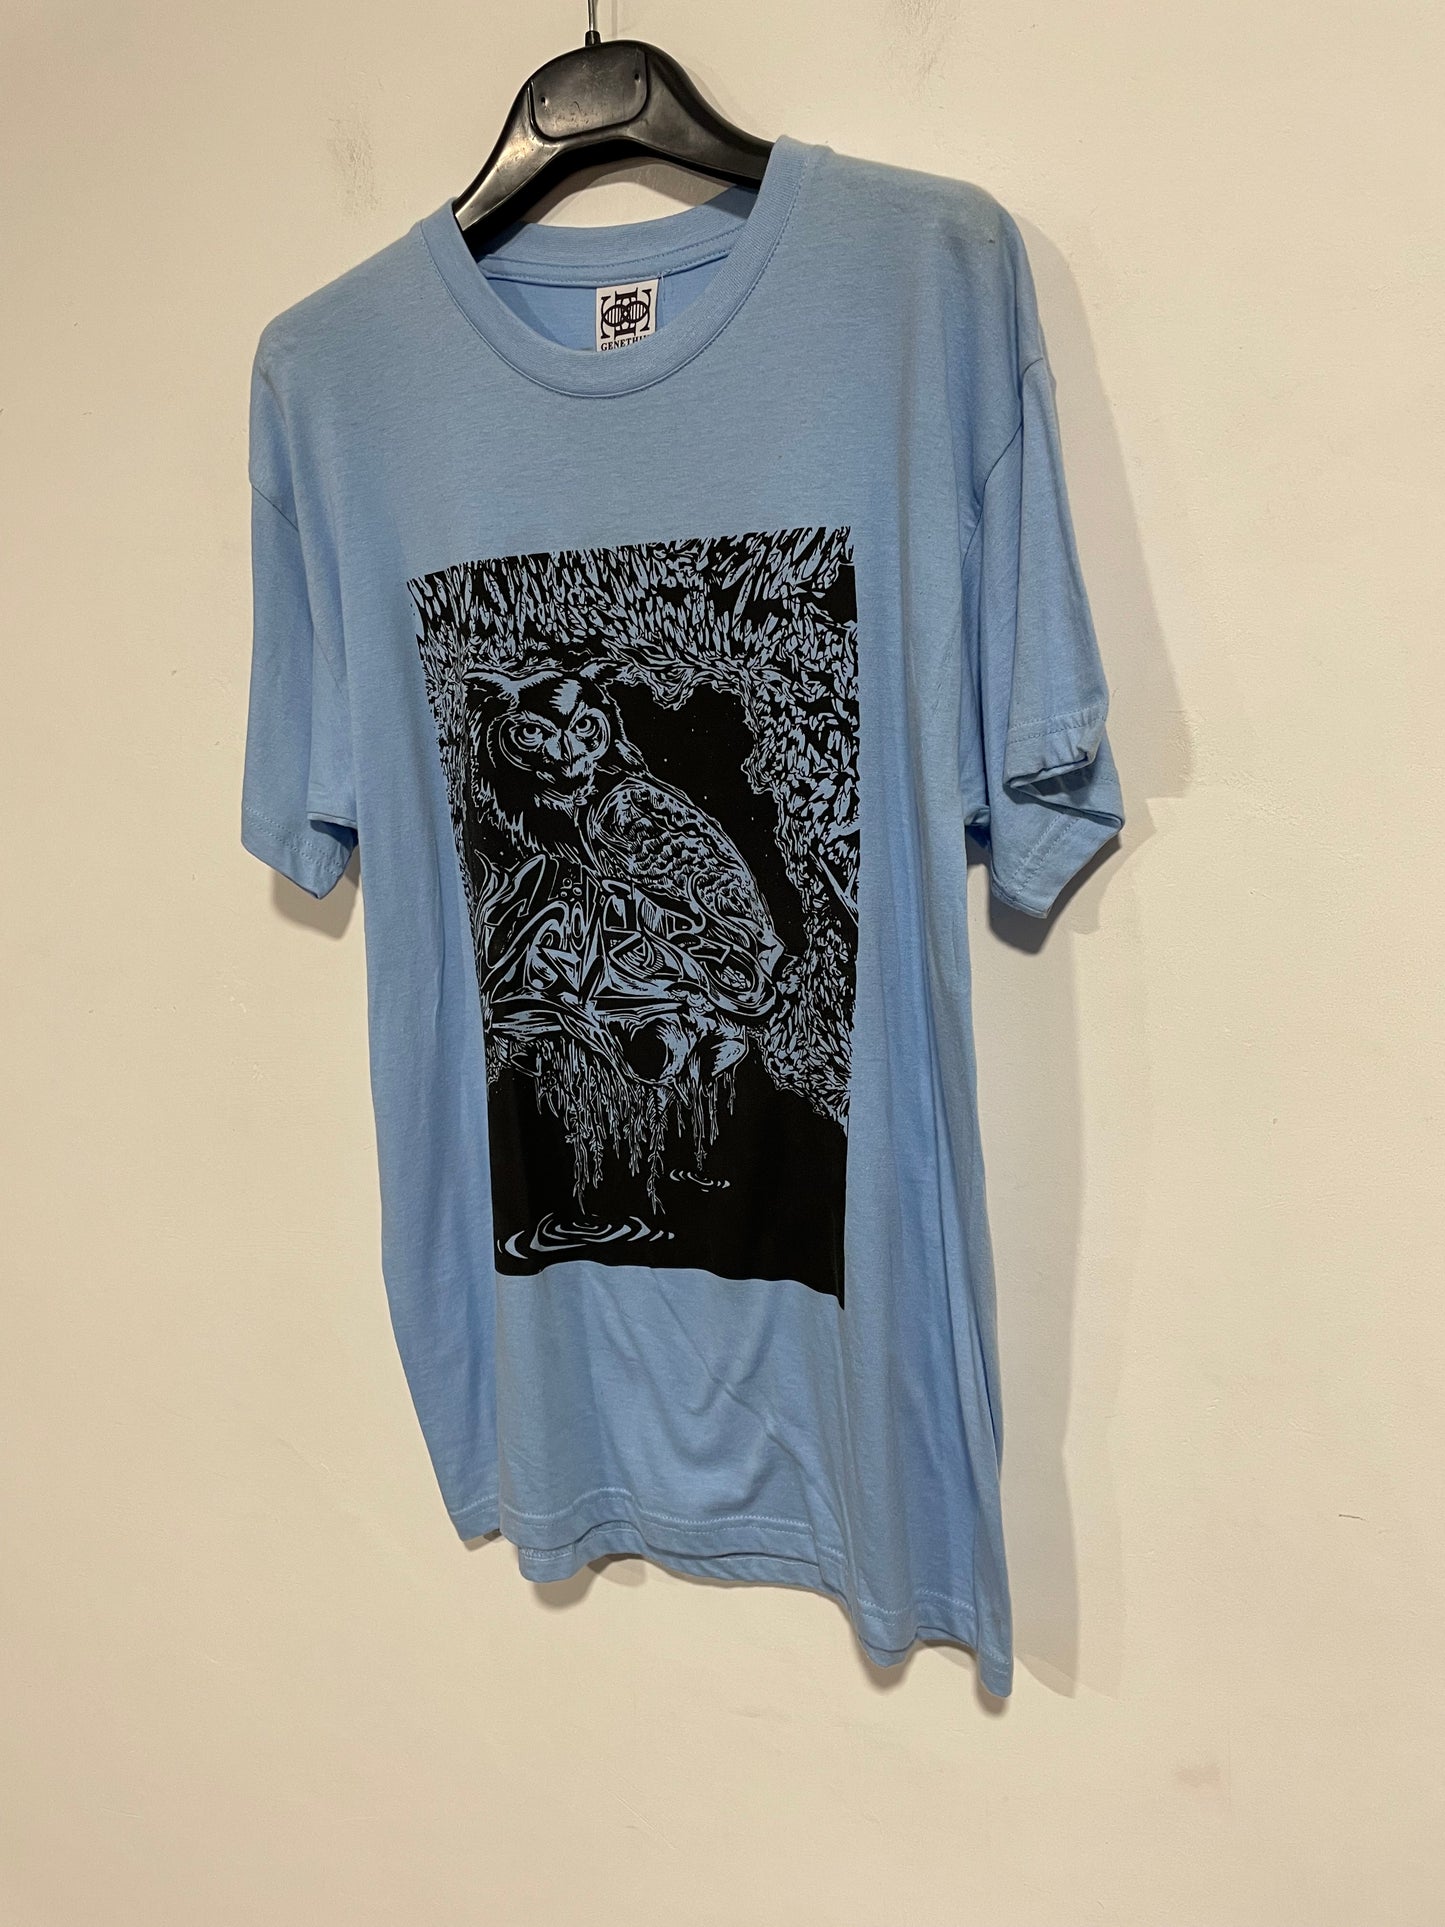 T shirt Genethik vecchia collezione Gufo azzurro